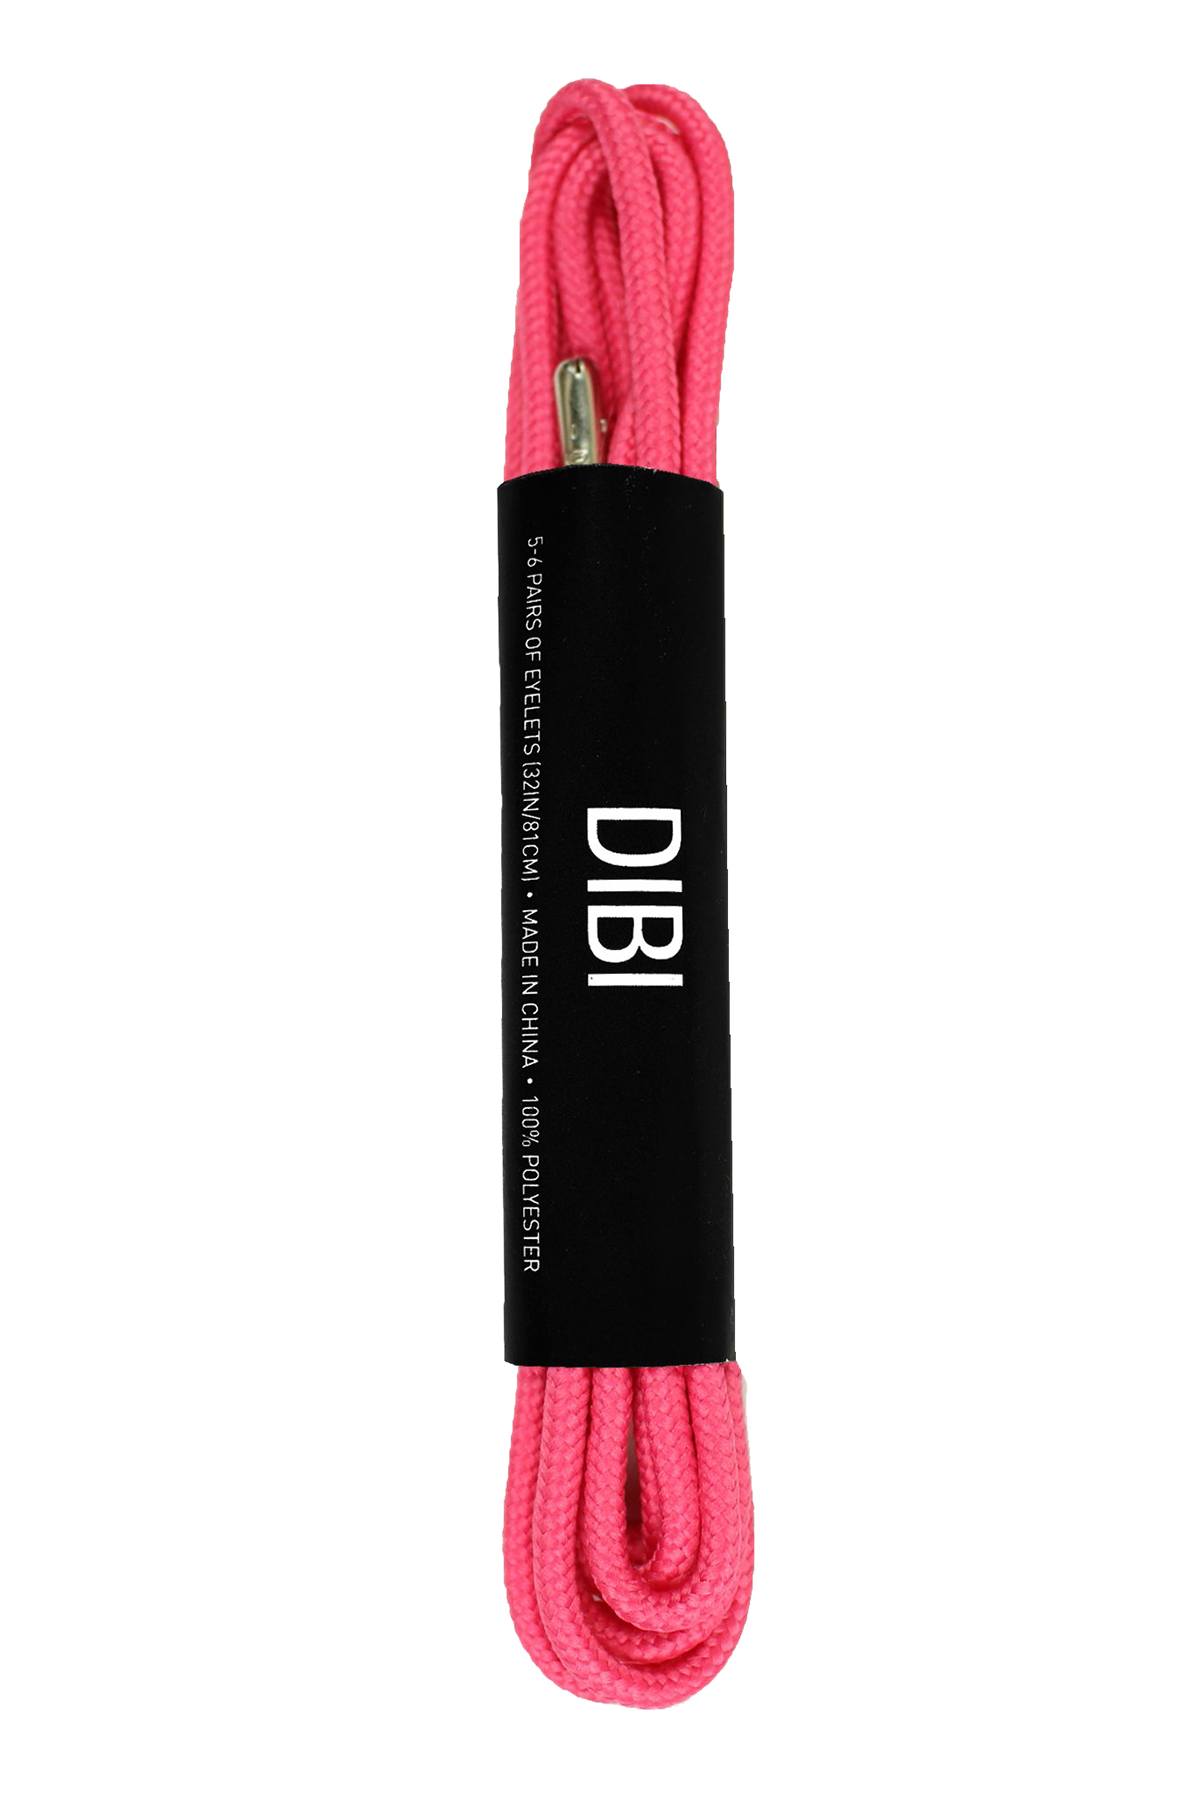 DIBI Solid Honeysuckle-Pink Dress Shoelaces w/ Silver Aglets